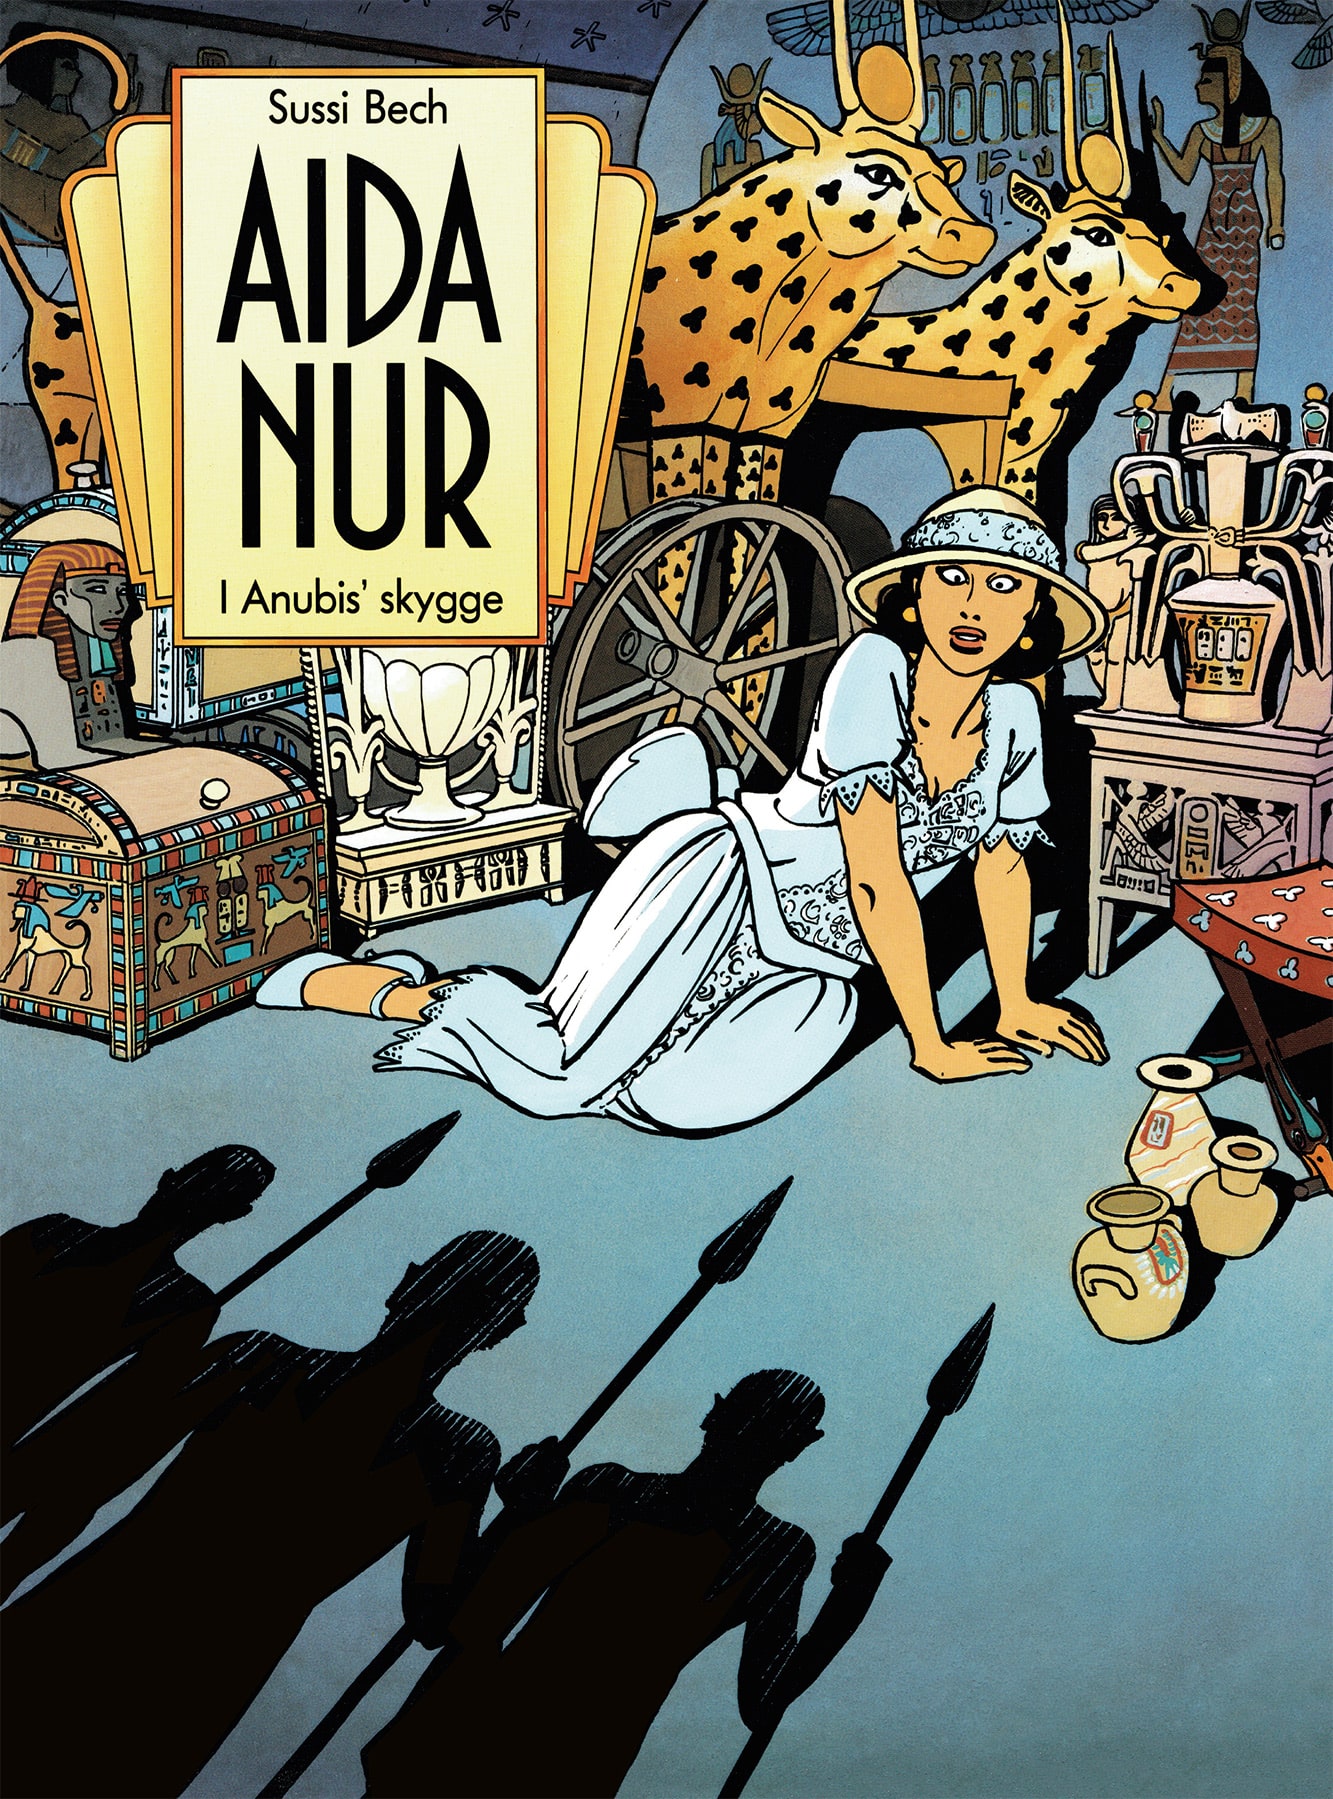 Aida Nur by Sussi Bech - mainstream comics